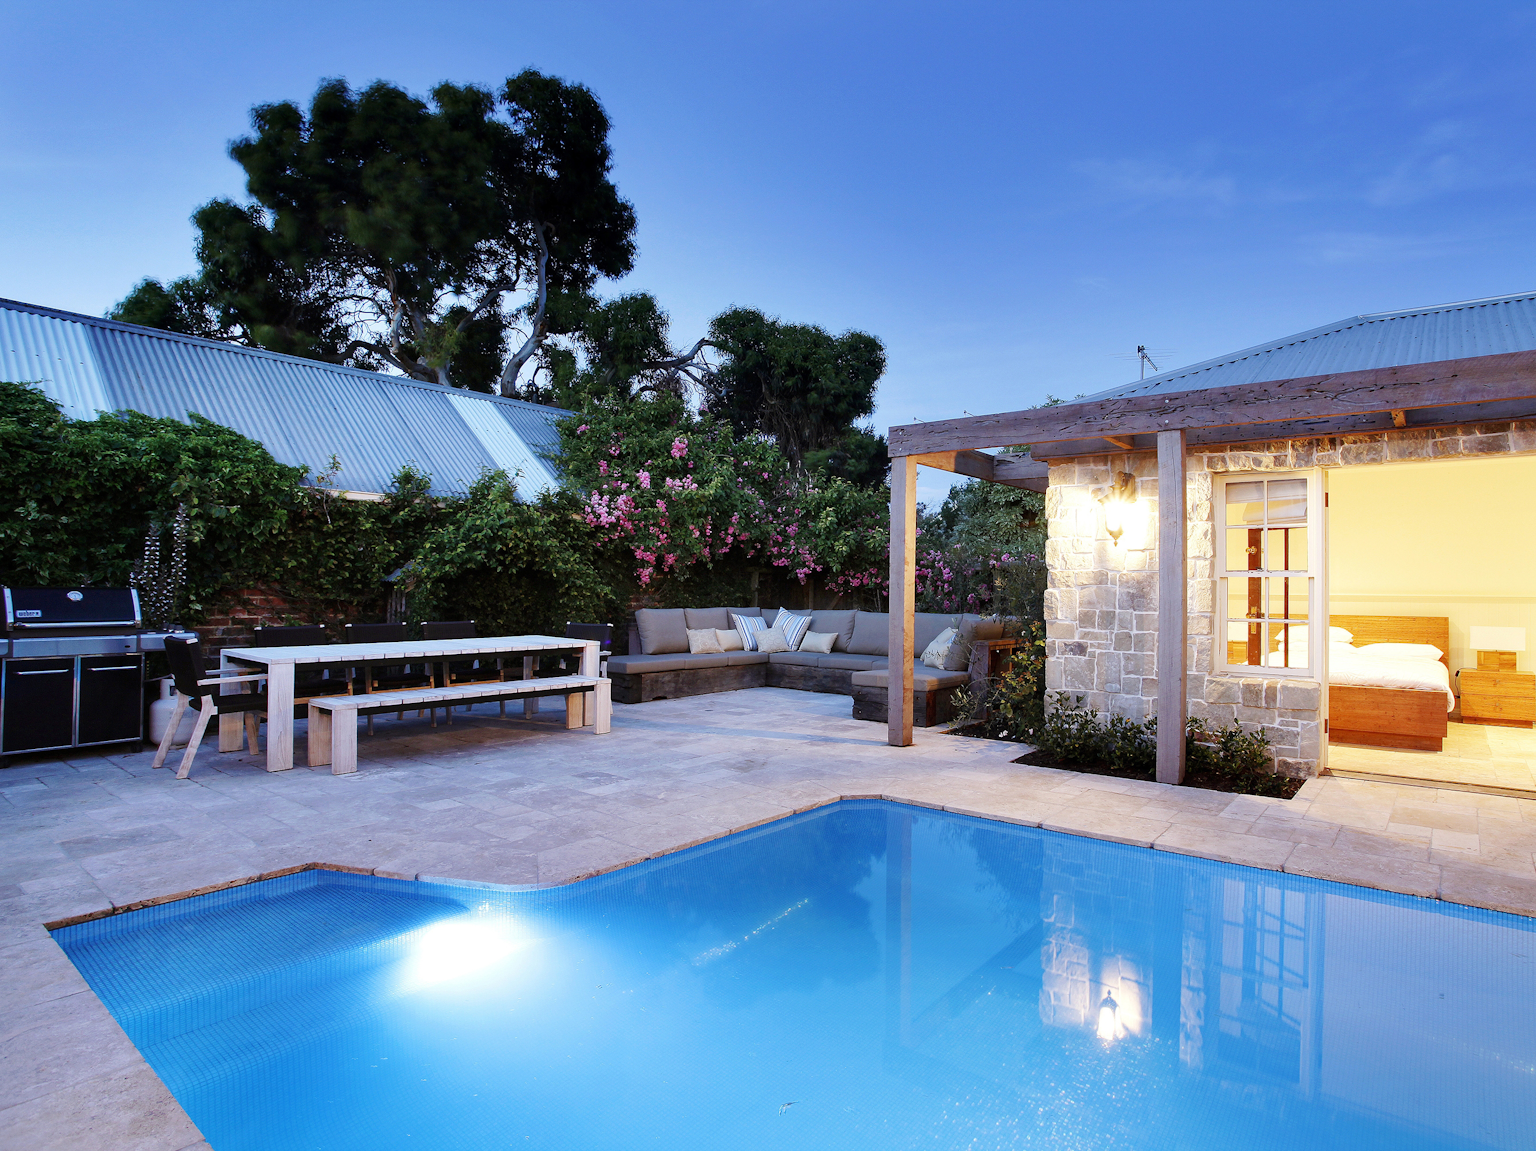 Capri travertine modular paving used as pool surround with Clancy sandstone random ashlar cladding on exterior of pool house 